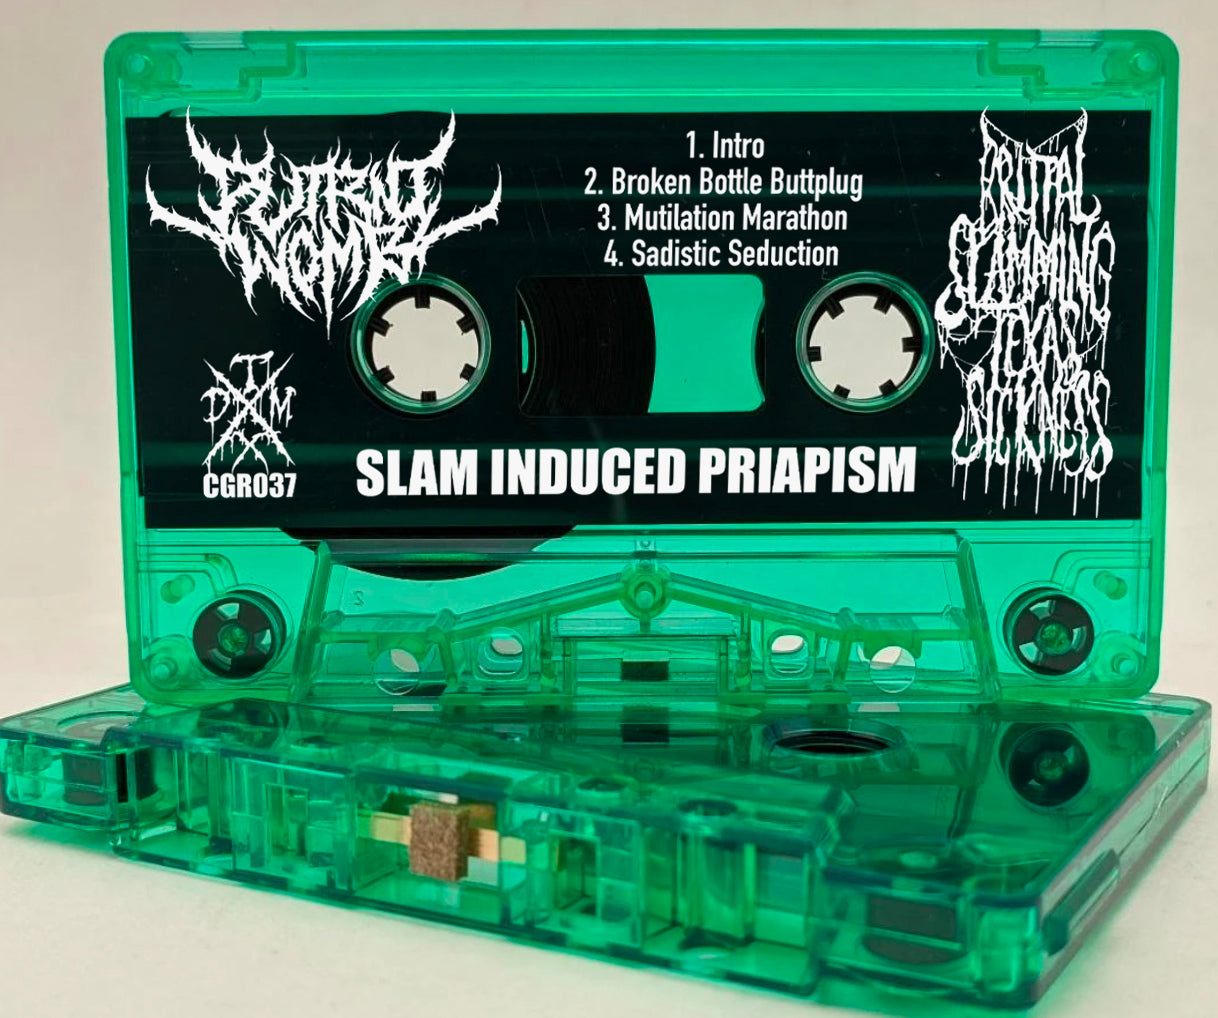 PUTRID WOMB - Slam Induced Priapism - cassette